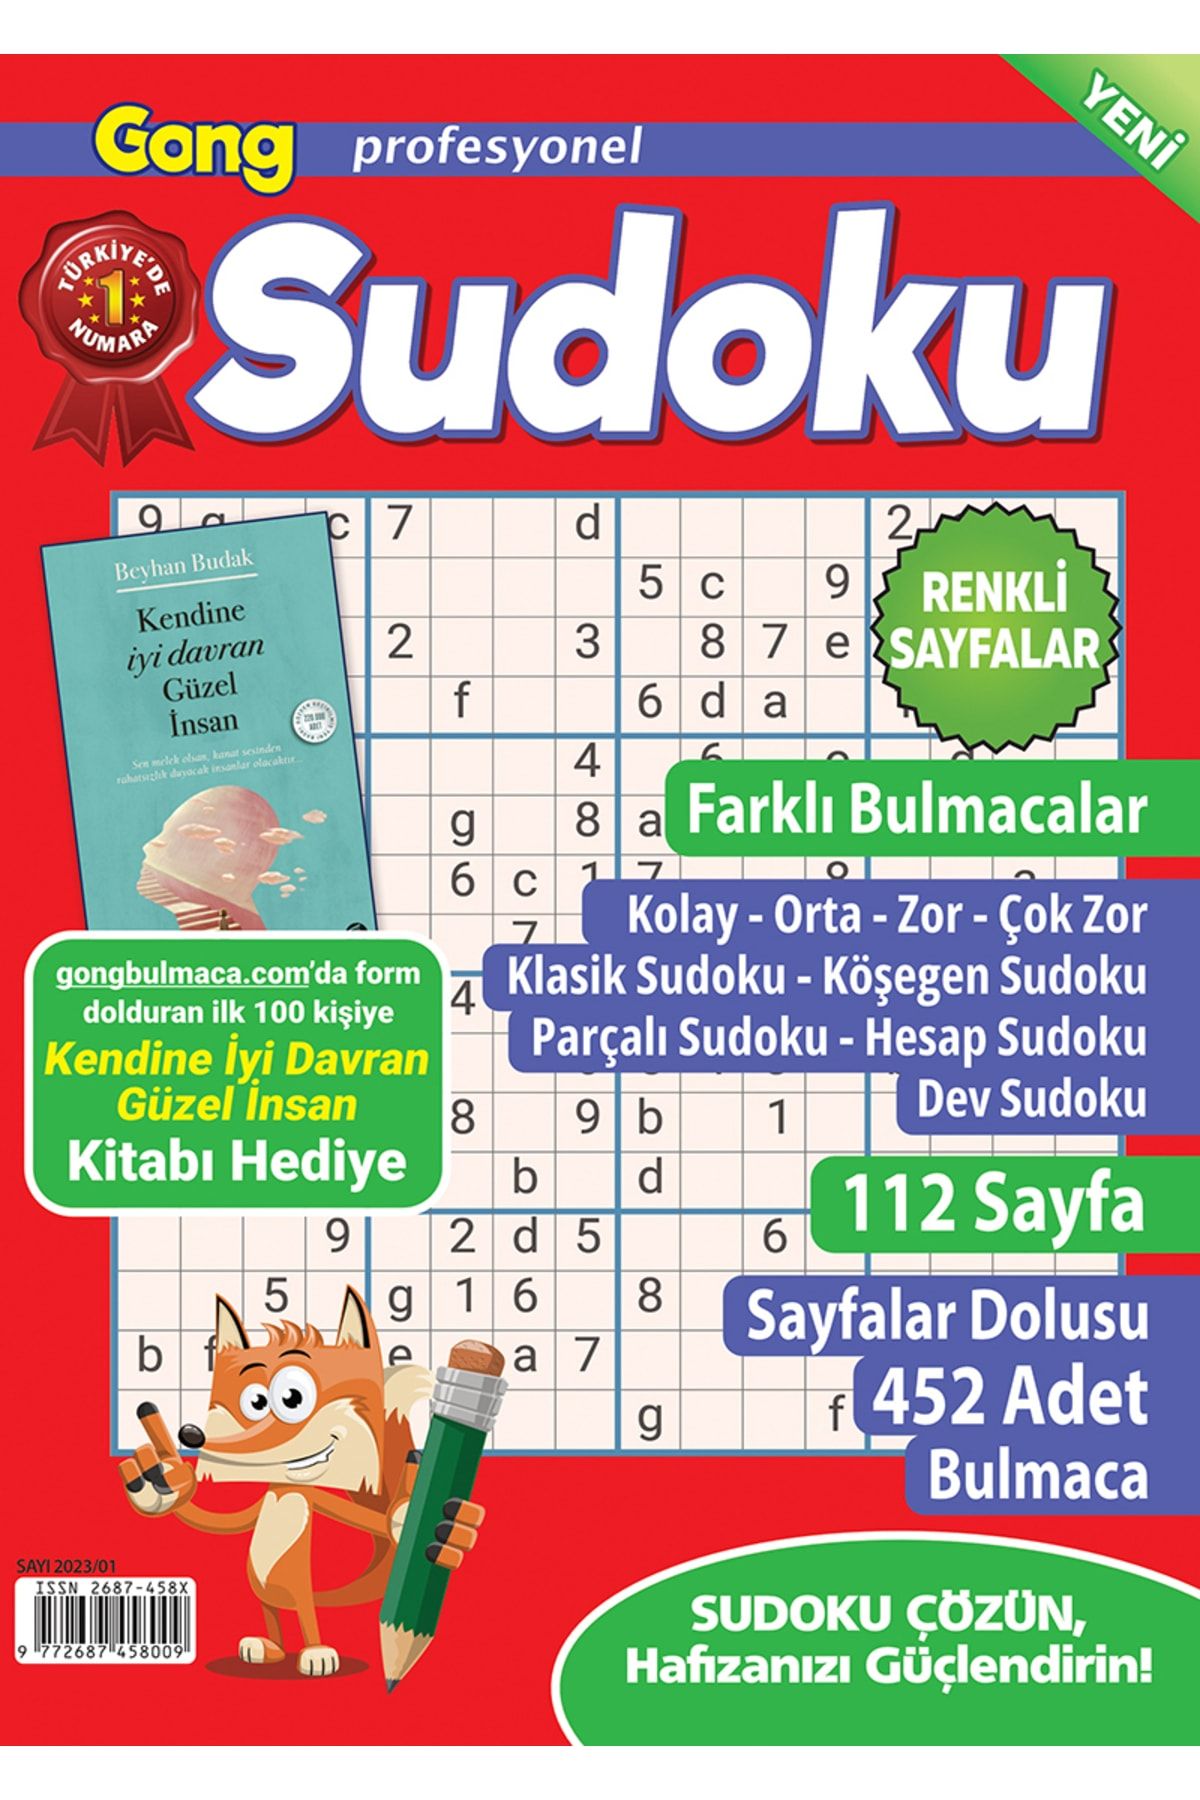 Gong Profesyonel Sudoku 013